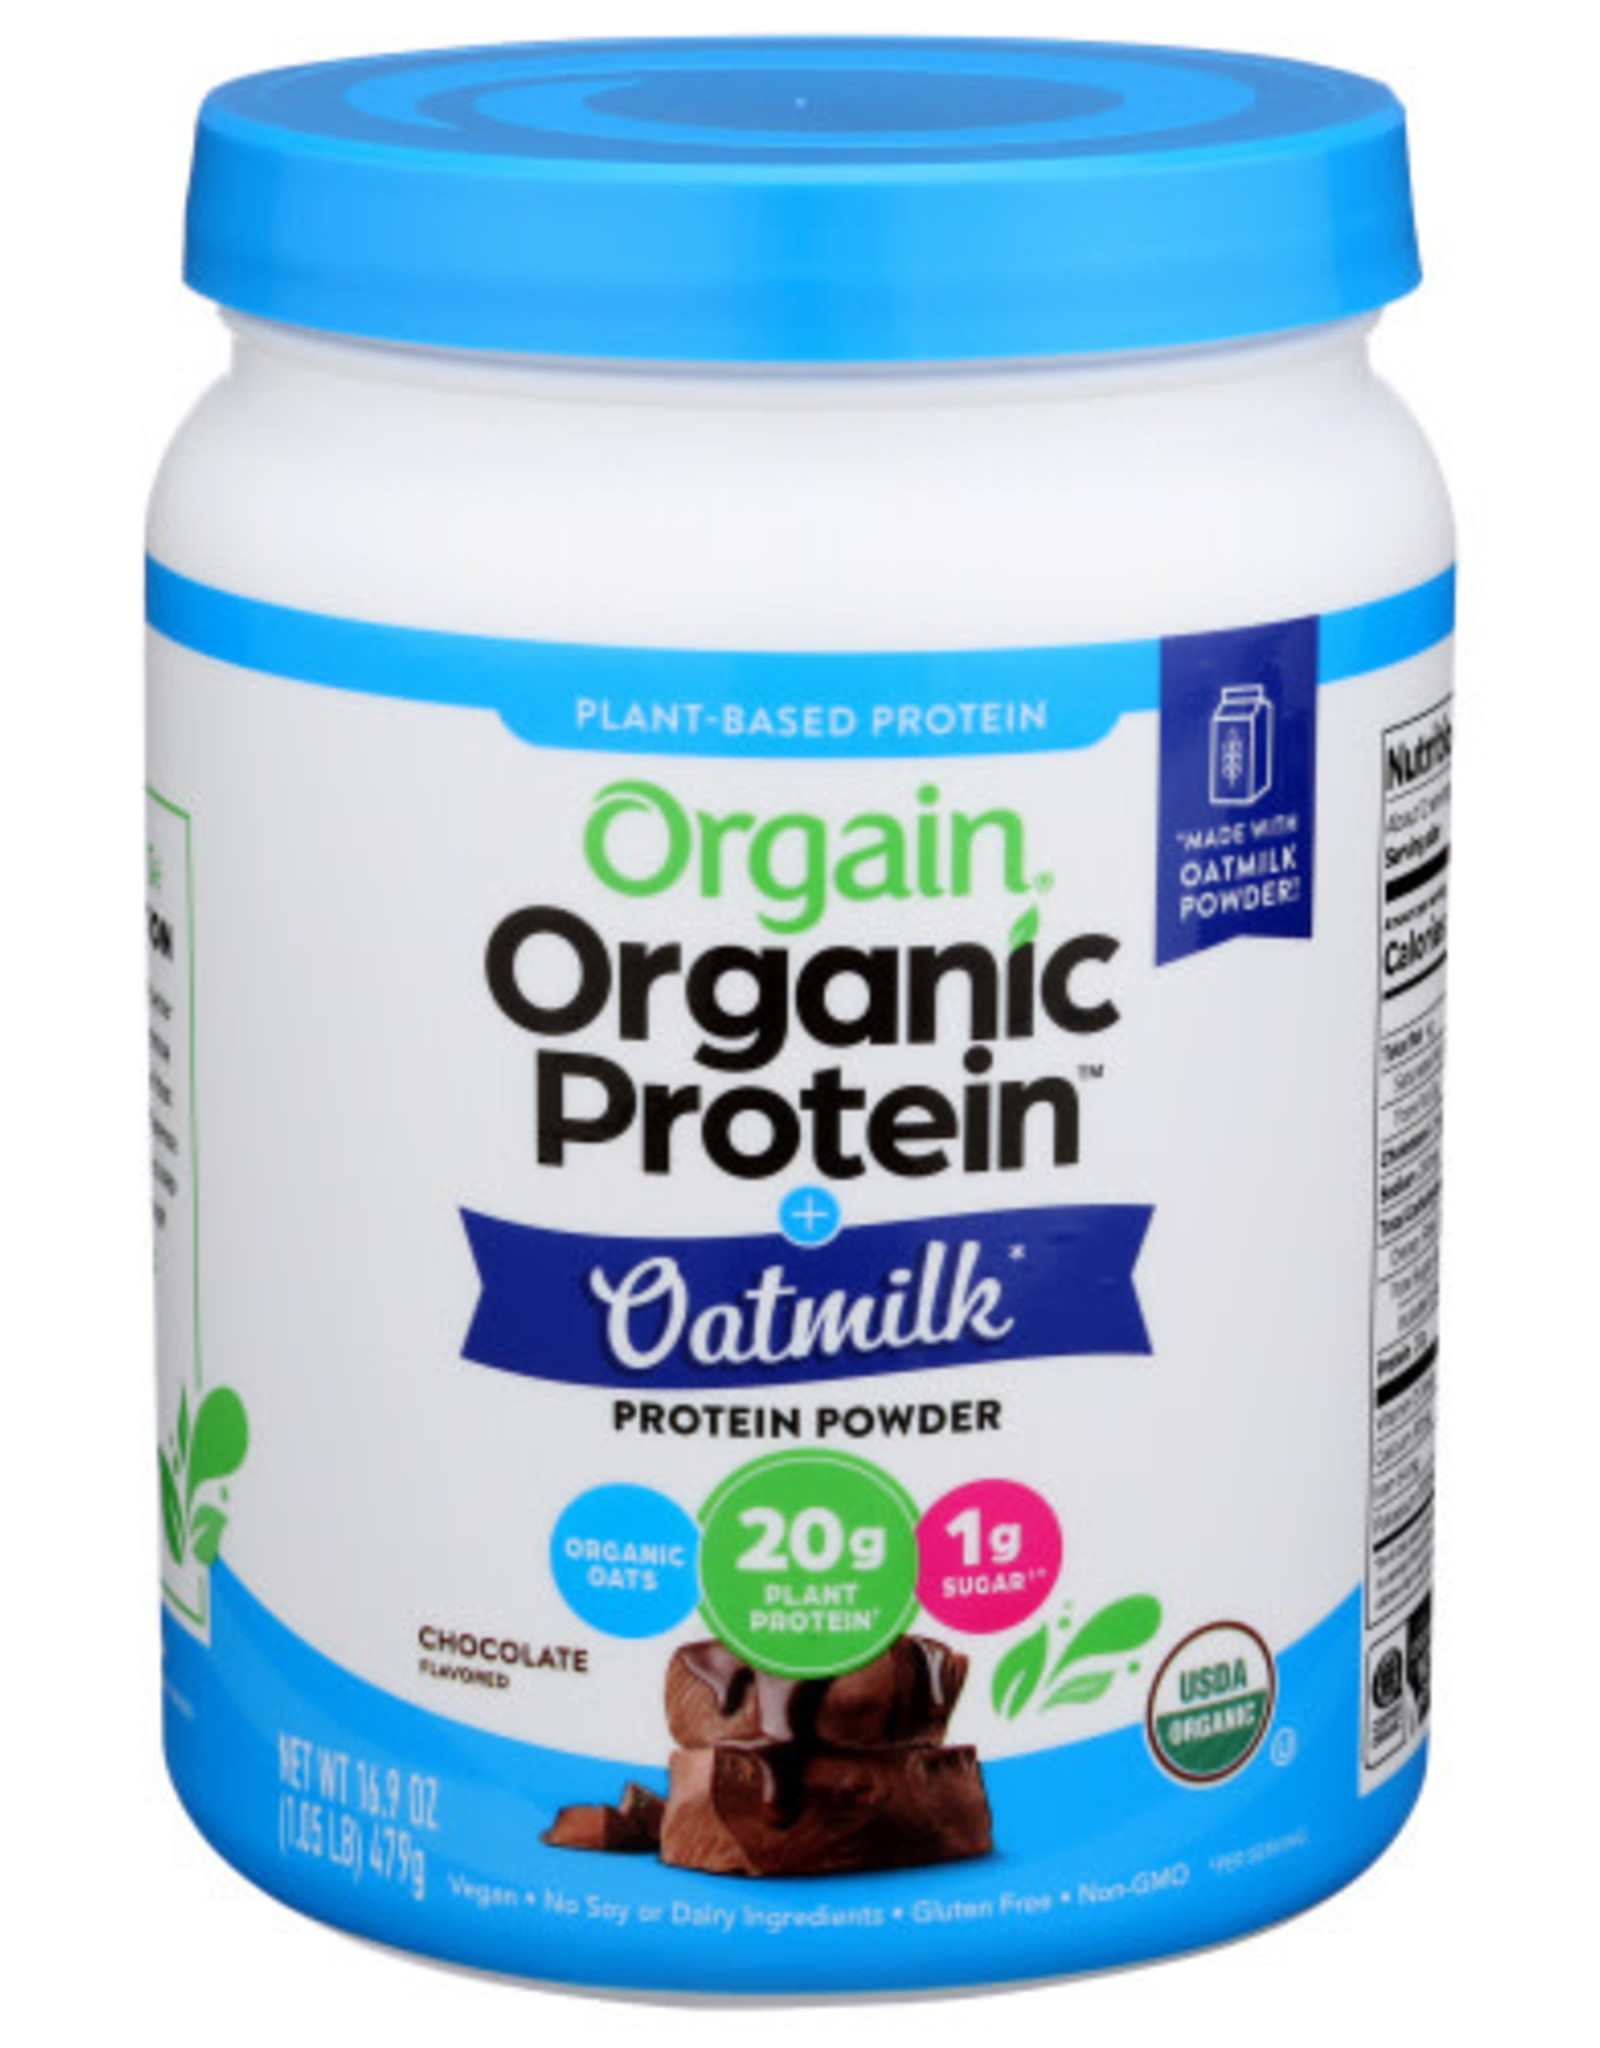 Orgain Protein Powder Oatmilk Chocolate